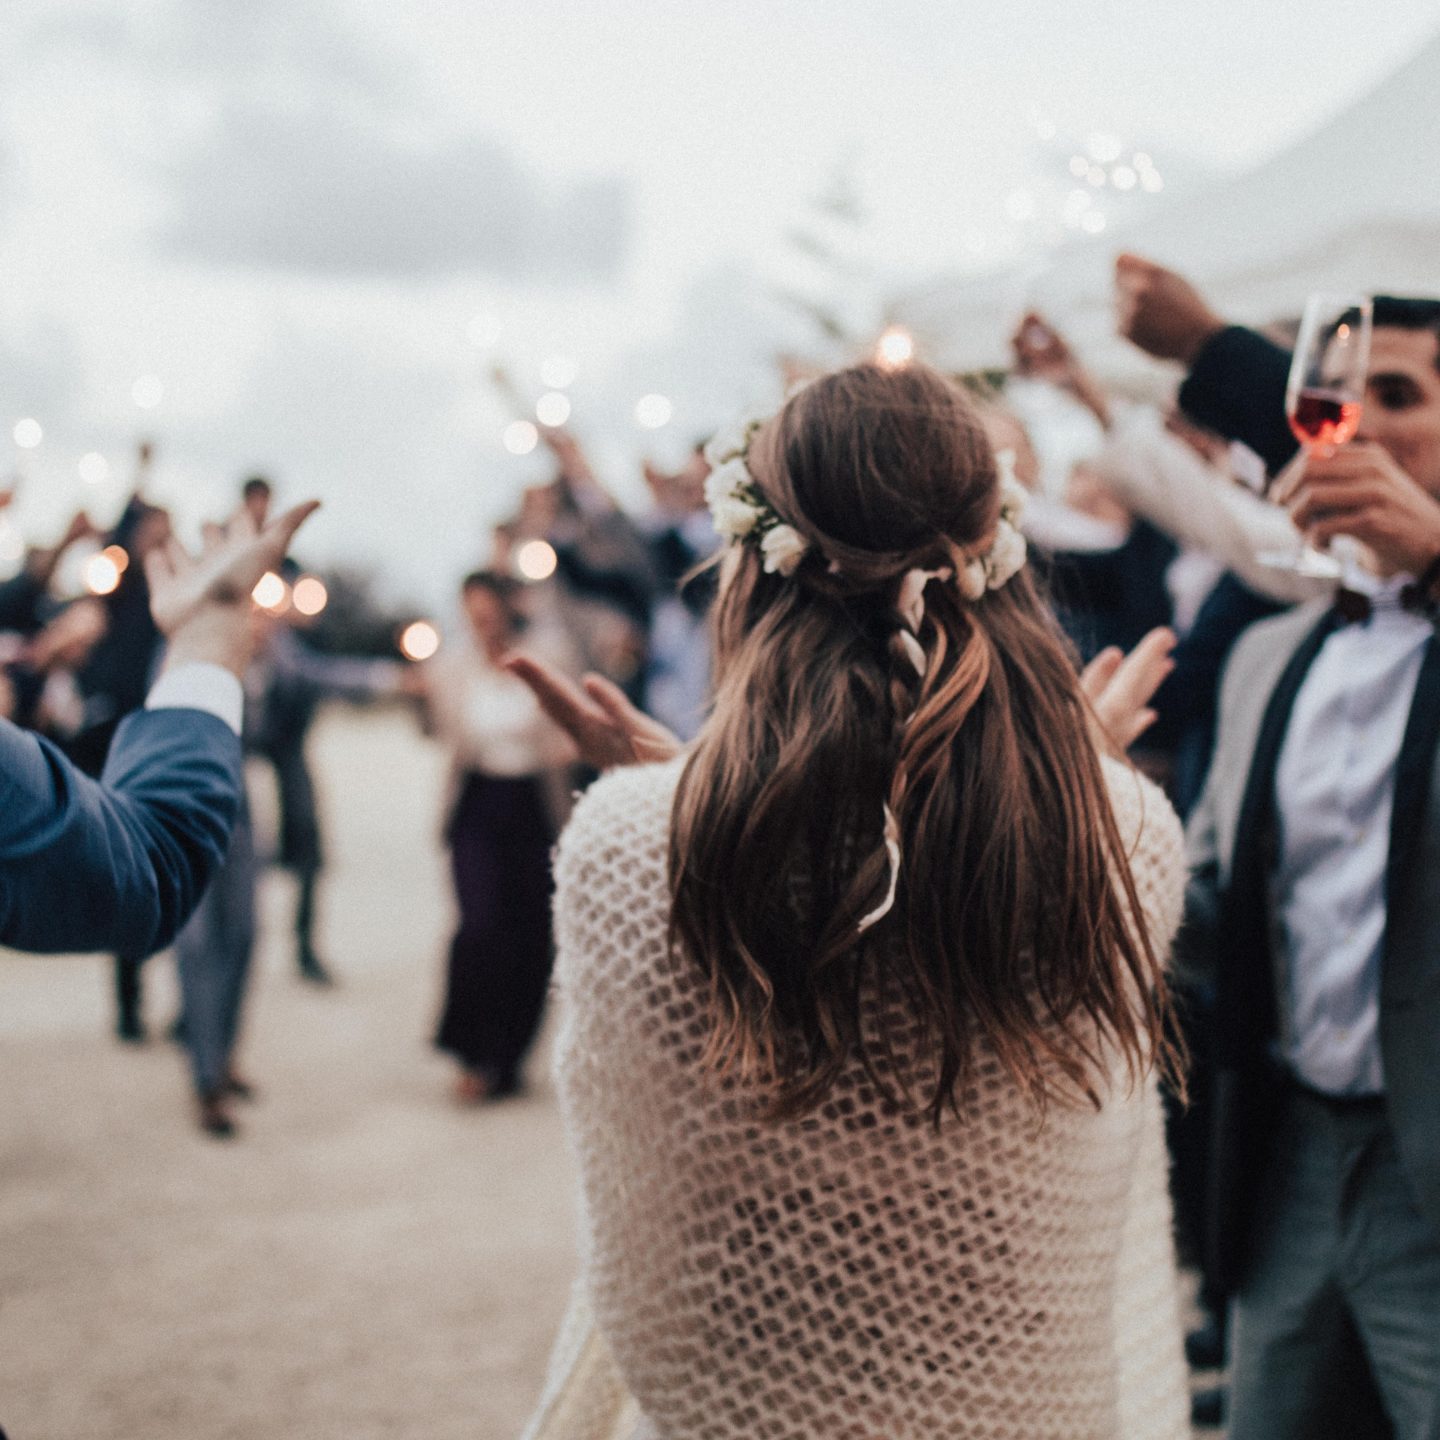 Wedding dancing